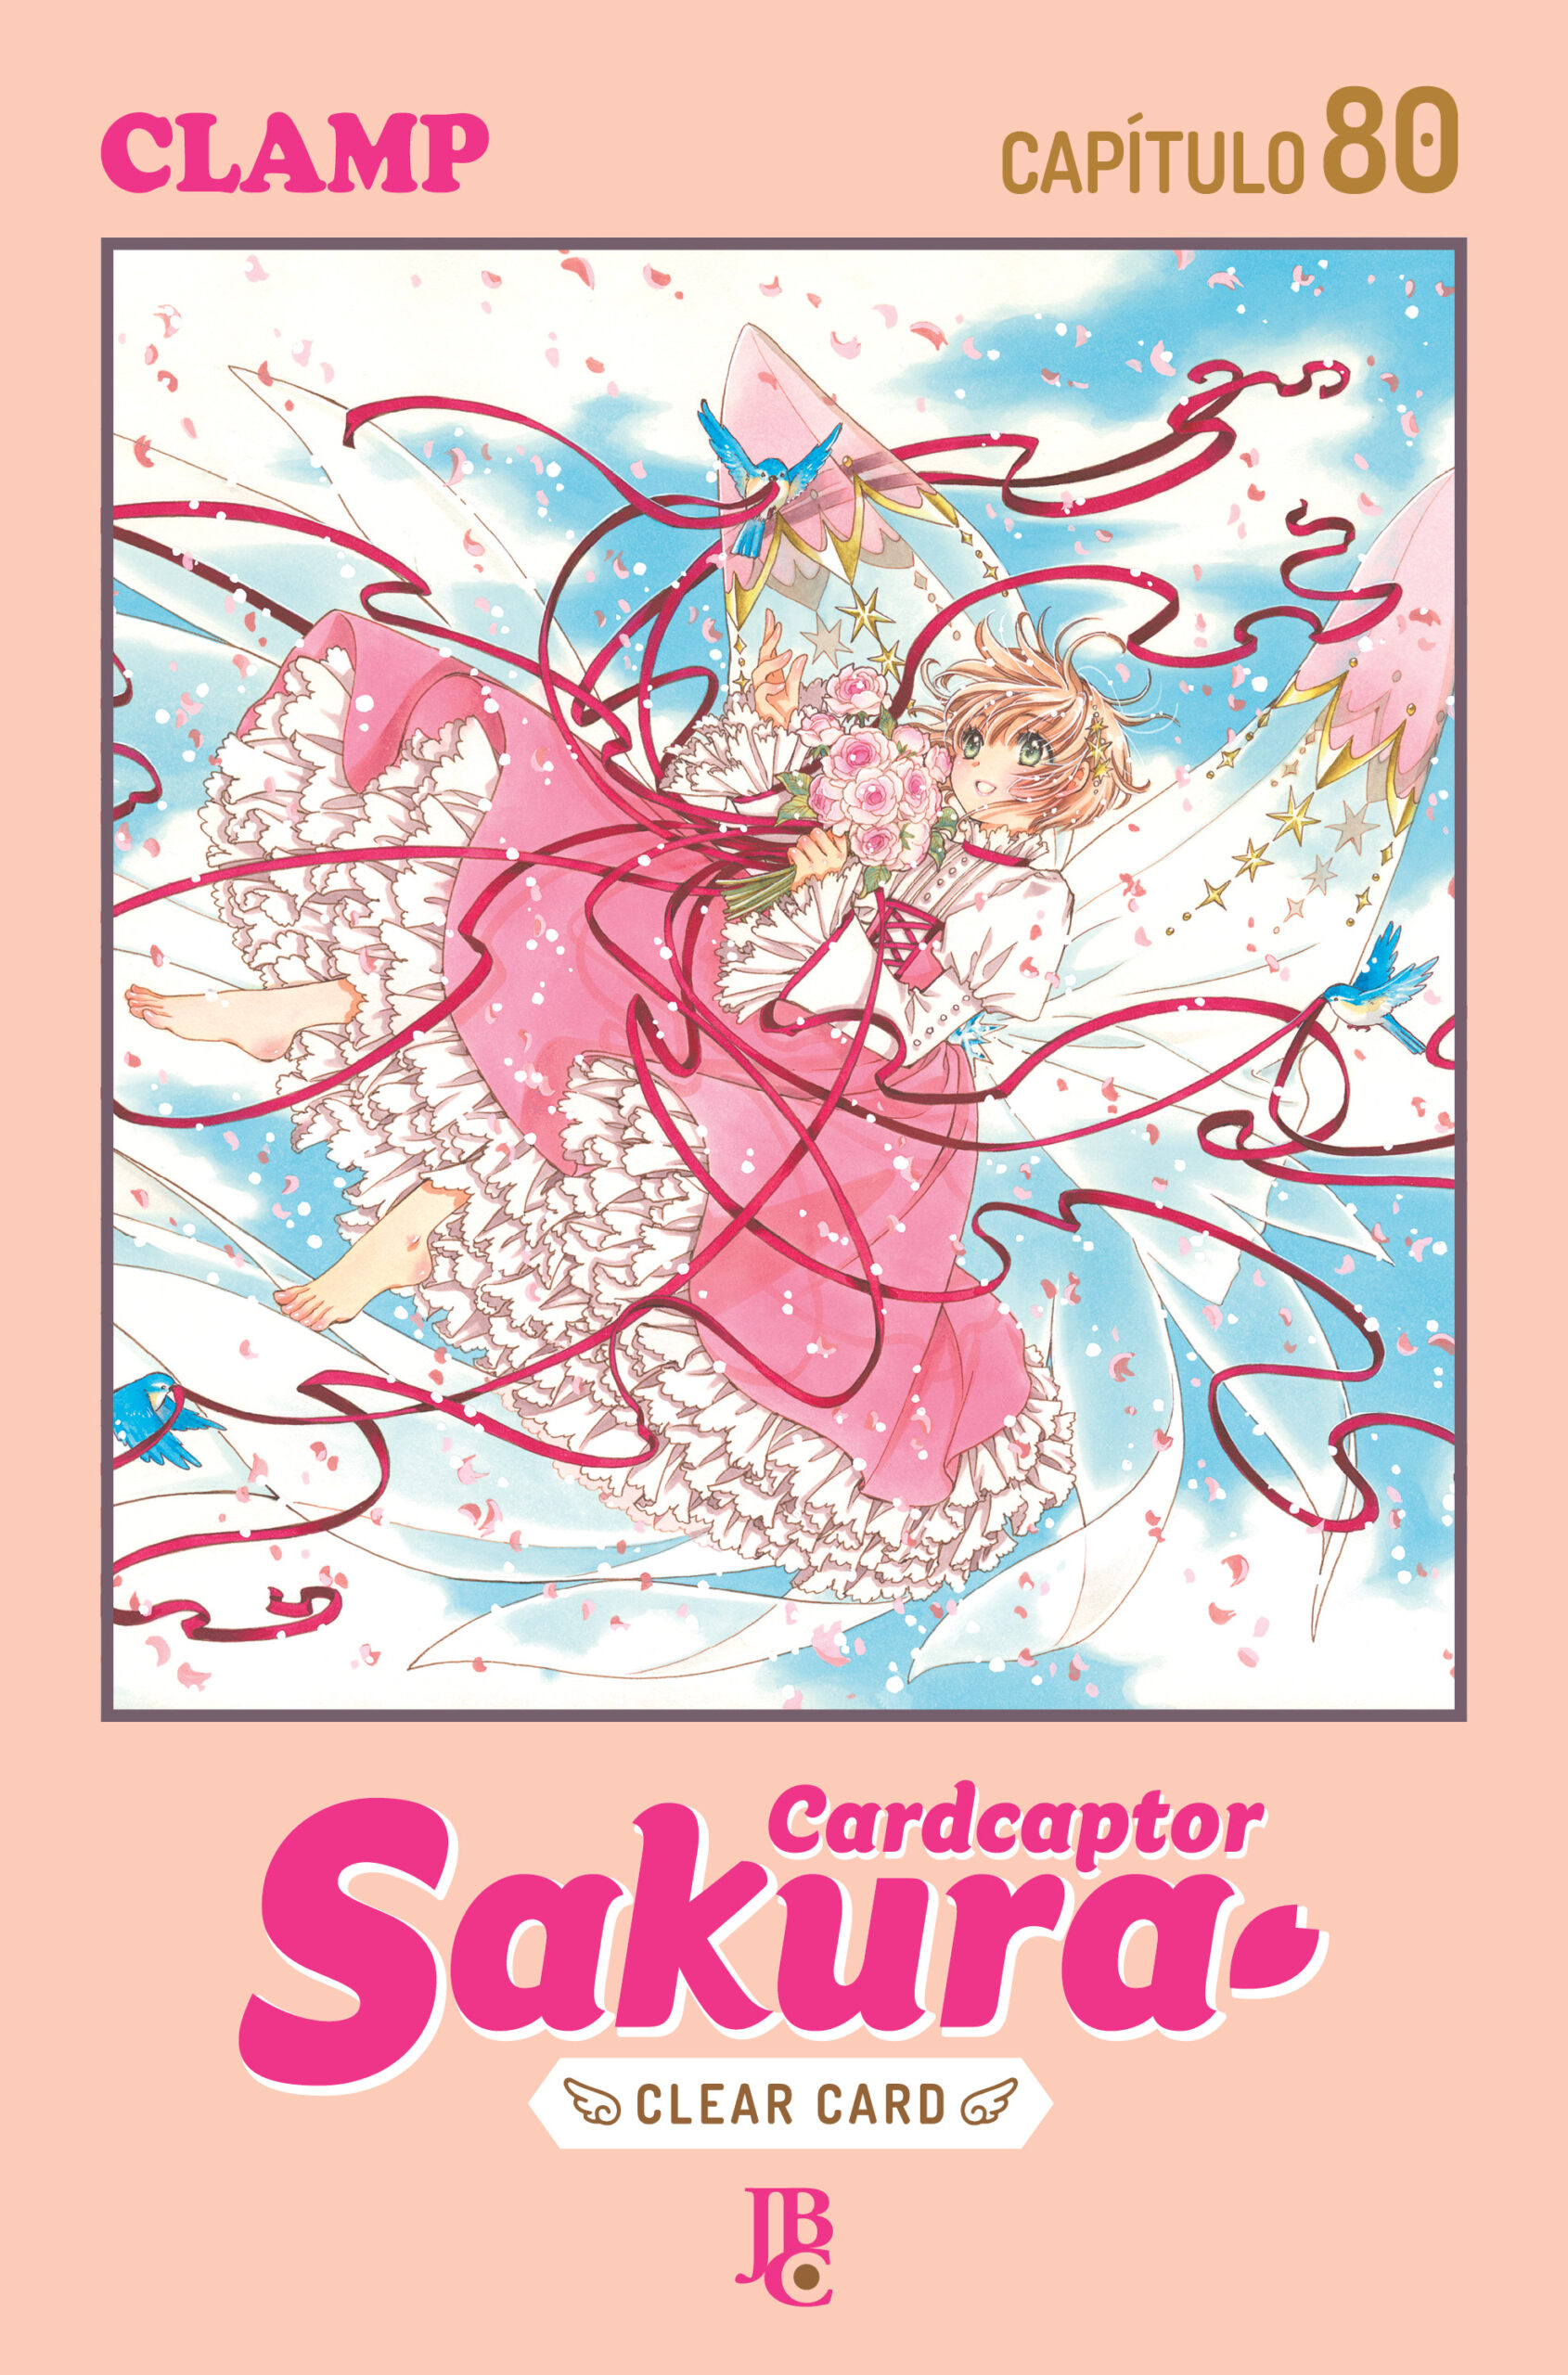 Card Captor Sakura – Clear Card arc – Chapter 78